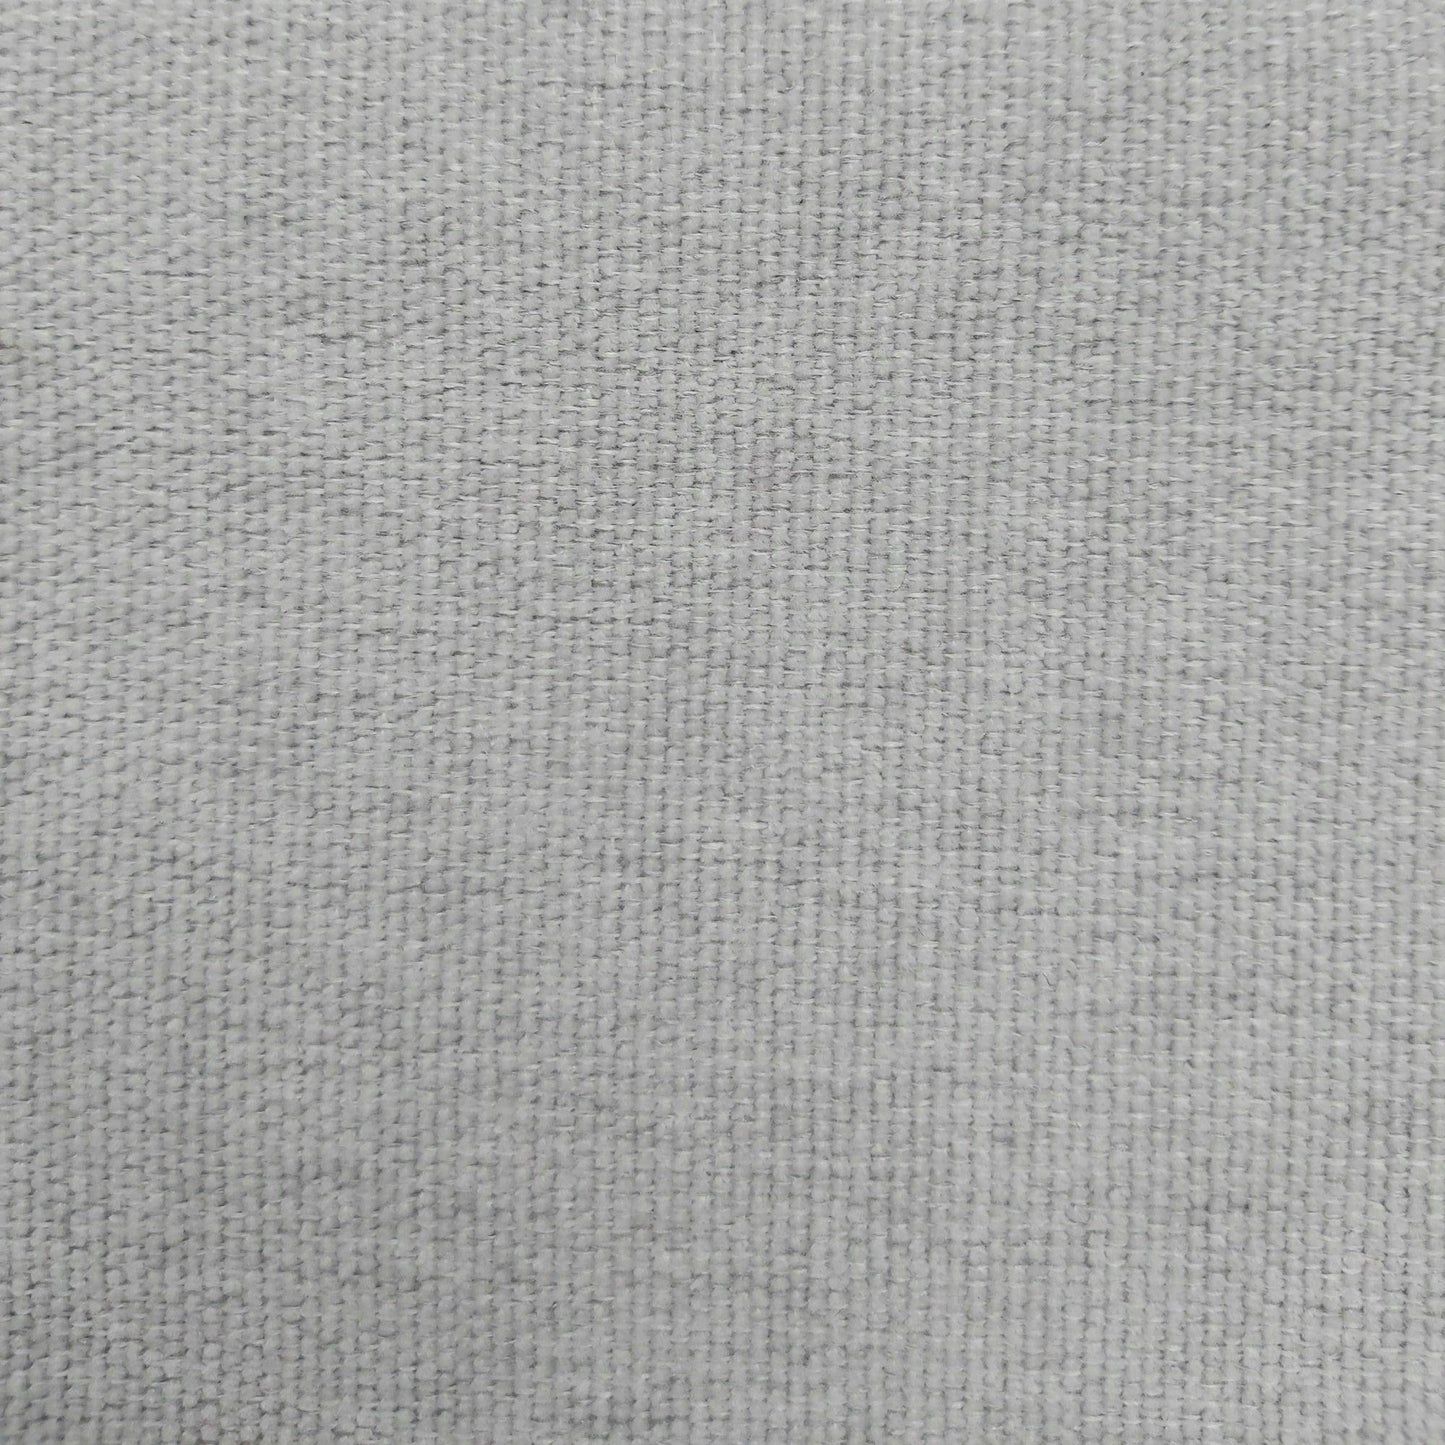 Chenille Upholstery Fabric Snug Medium Grey